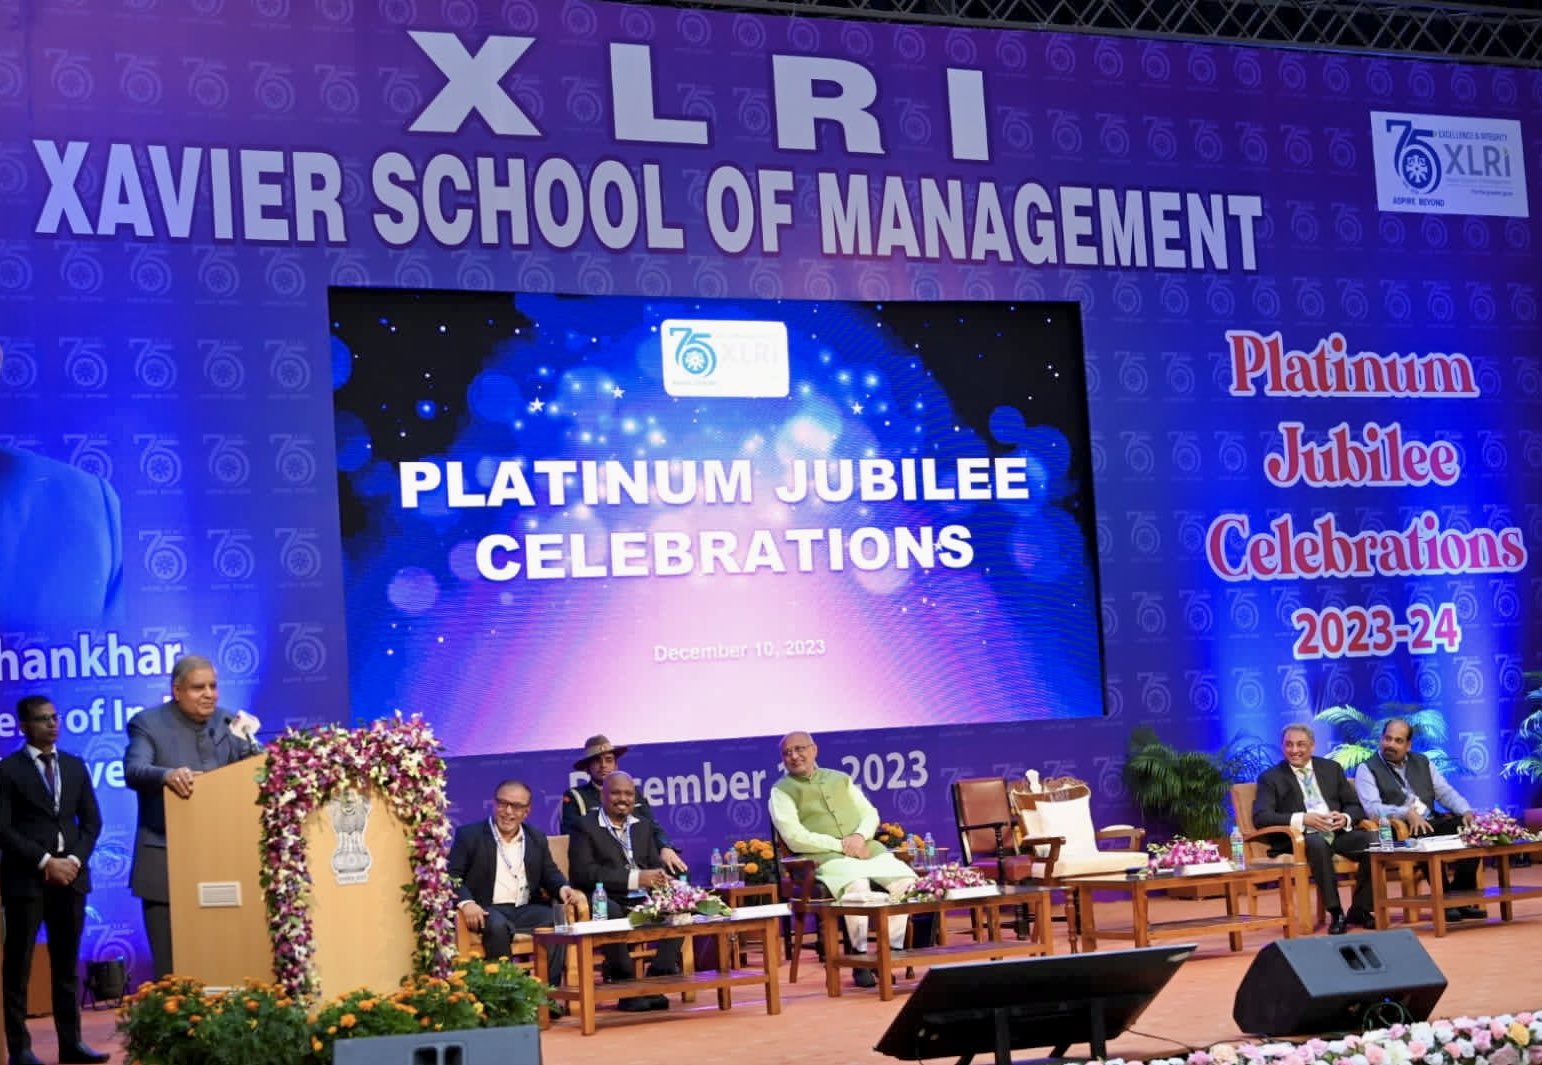 The Vice-President, Shri Jagdeep Dhankhar addressing the gathering at the Platinum Jubilee celebrations of XLRI-Xavier School of Management at Jamshedpur in Jharkhand on December 10, 2023.